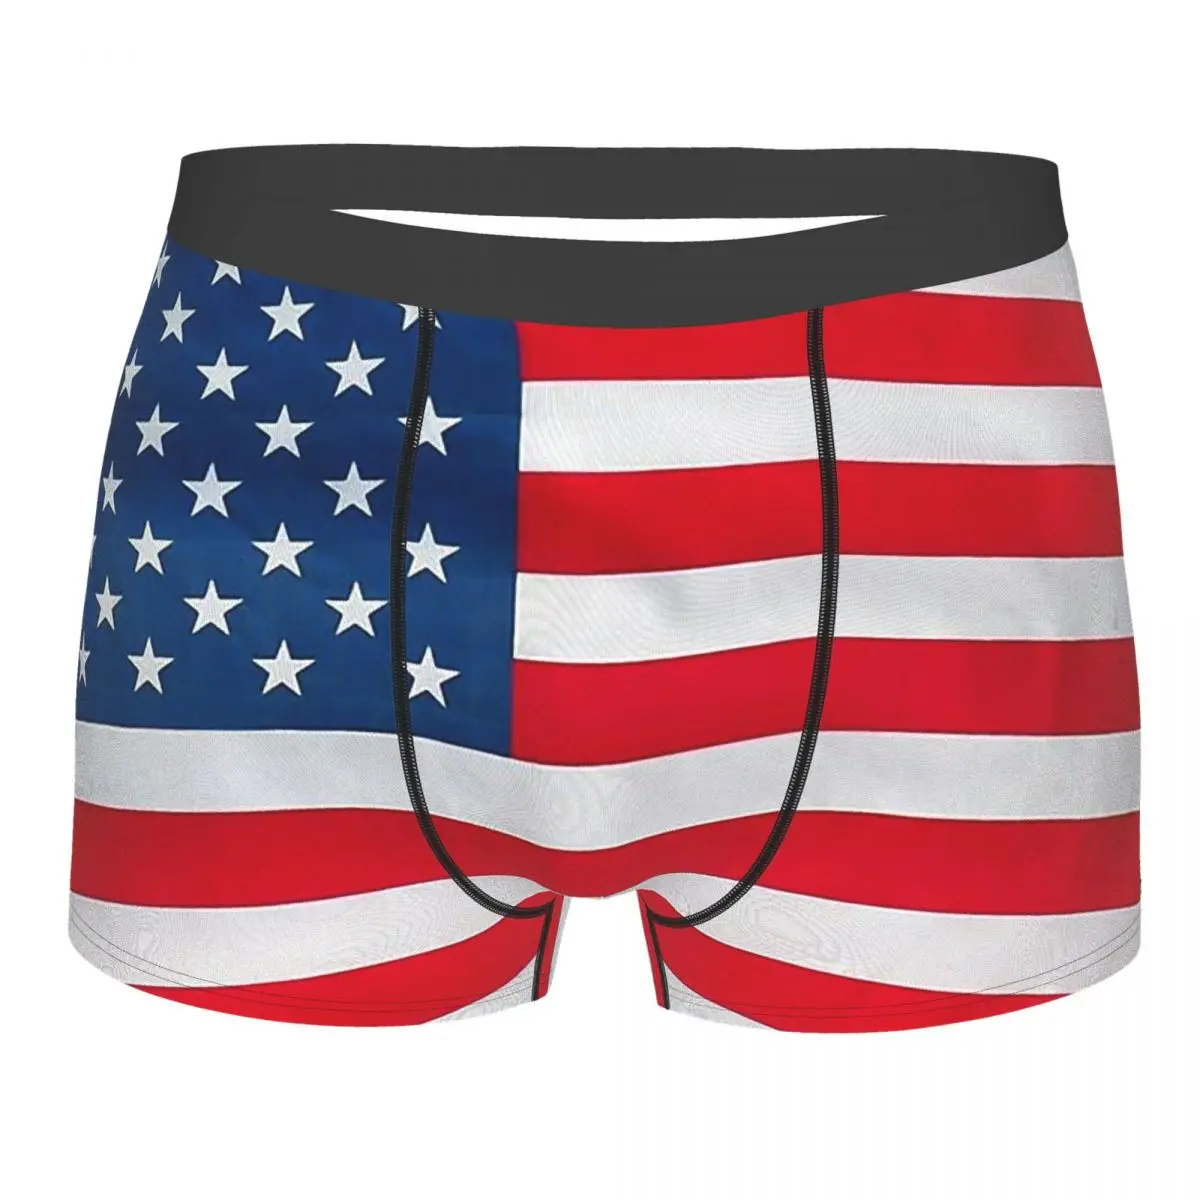 Flag American Underpants Cotton Panties Man Underwear Ventilate Shorts Boxer Briefs